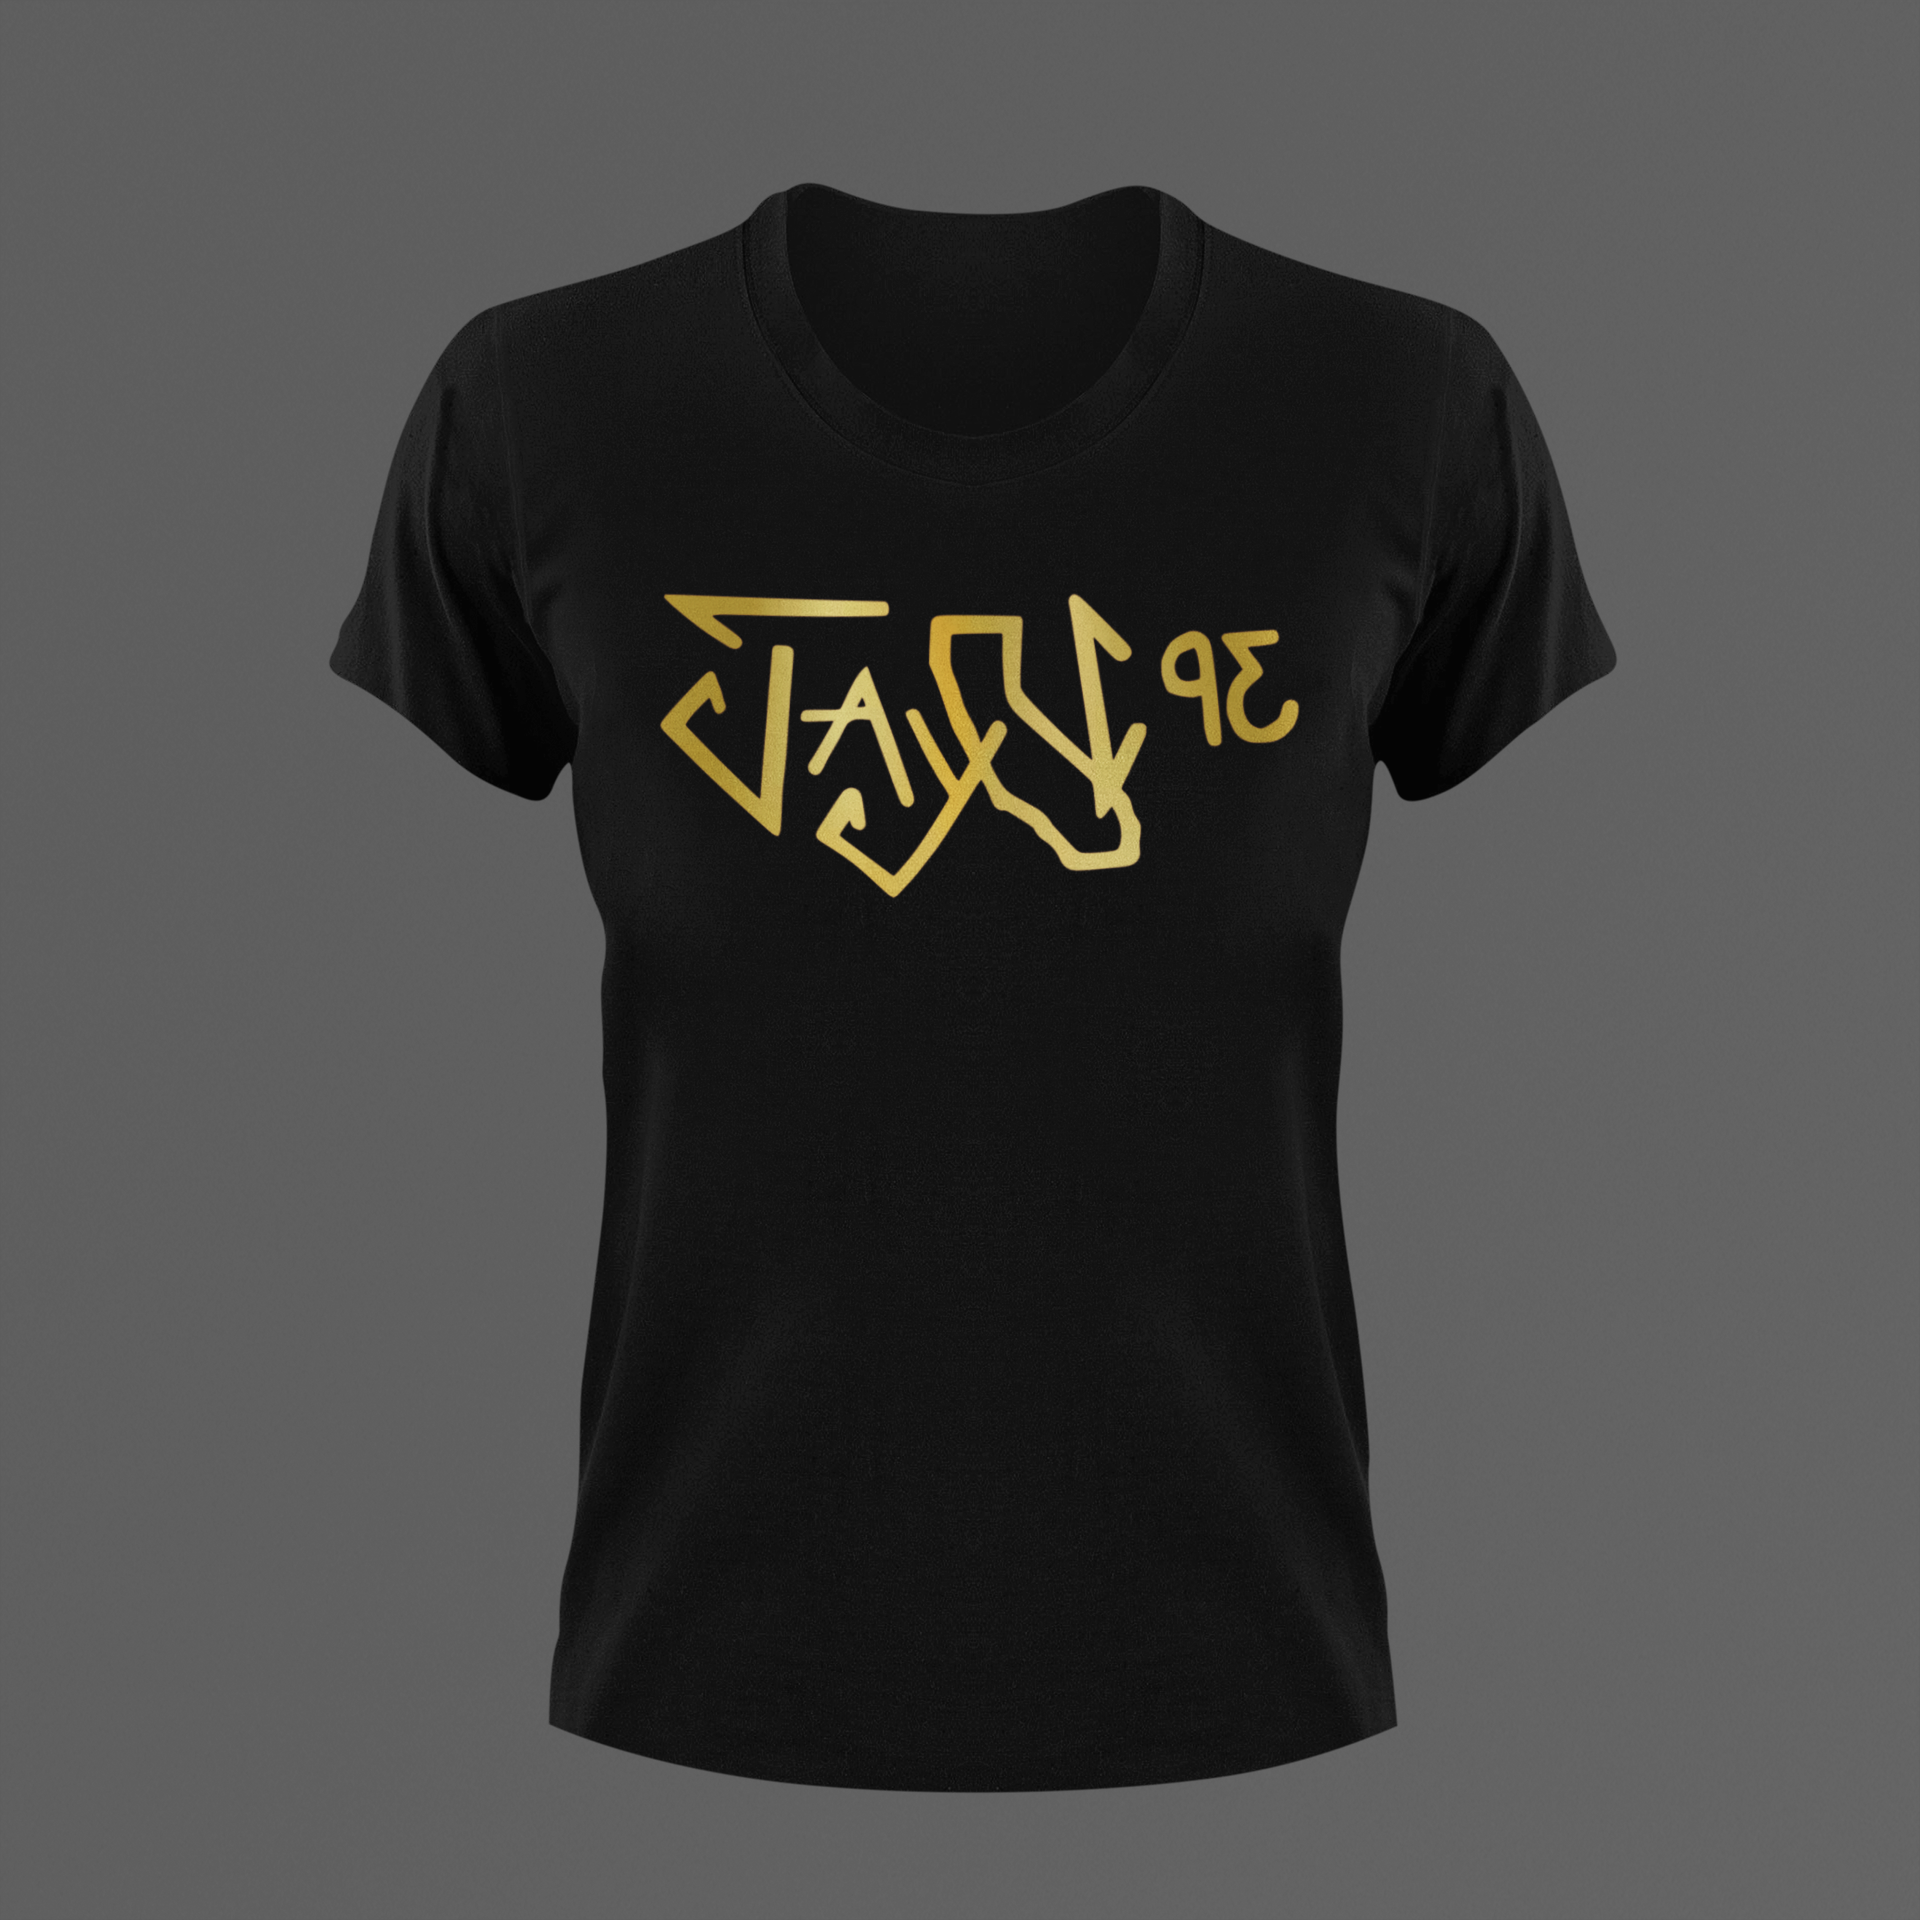 Official Jay Cee Logo Tee.